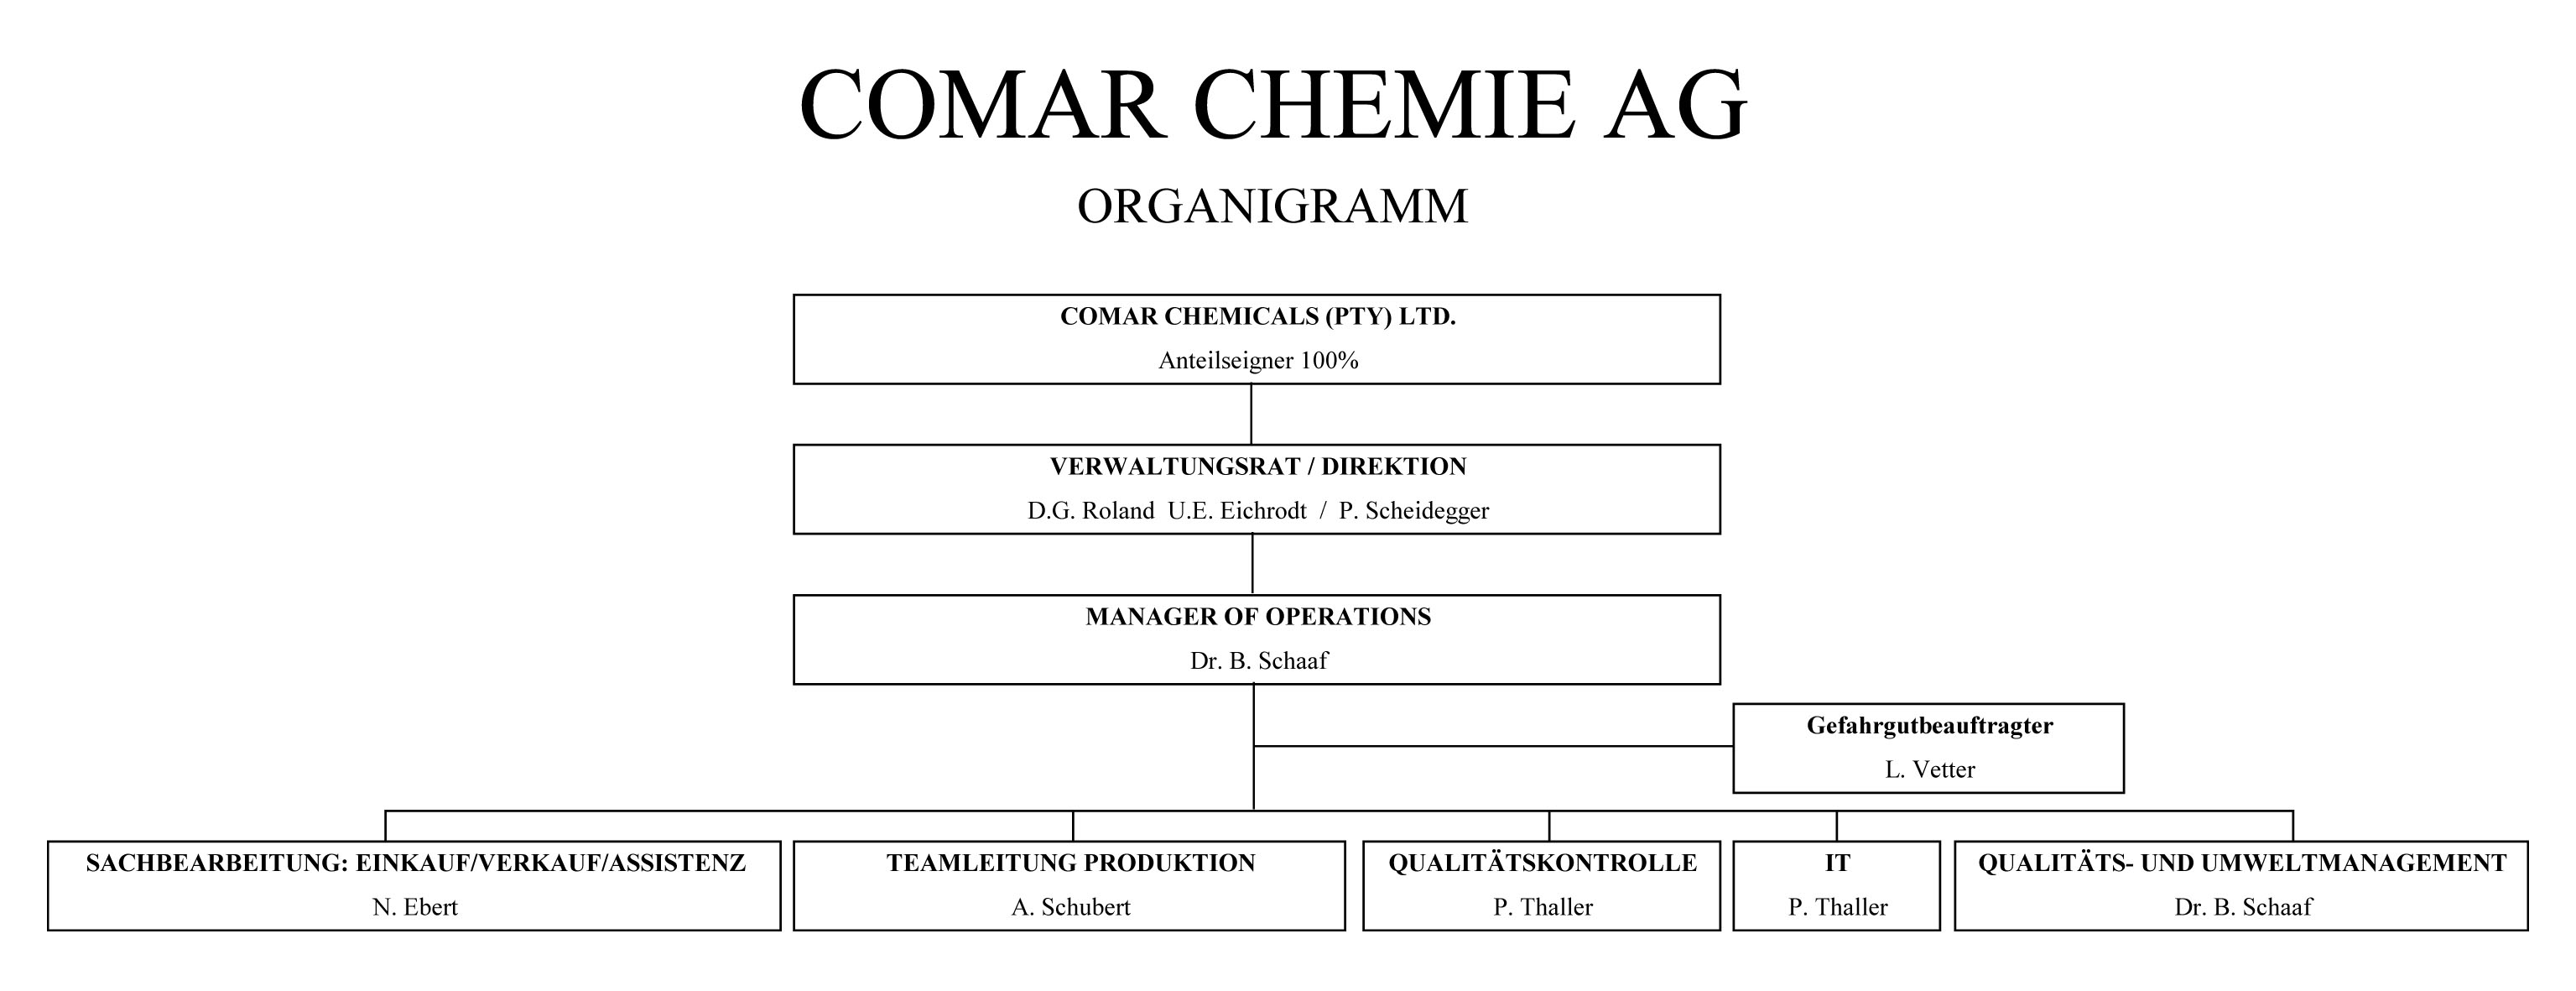 Organigramm CCAG 011017b